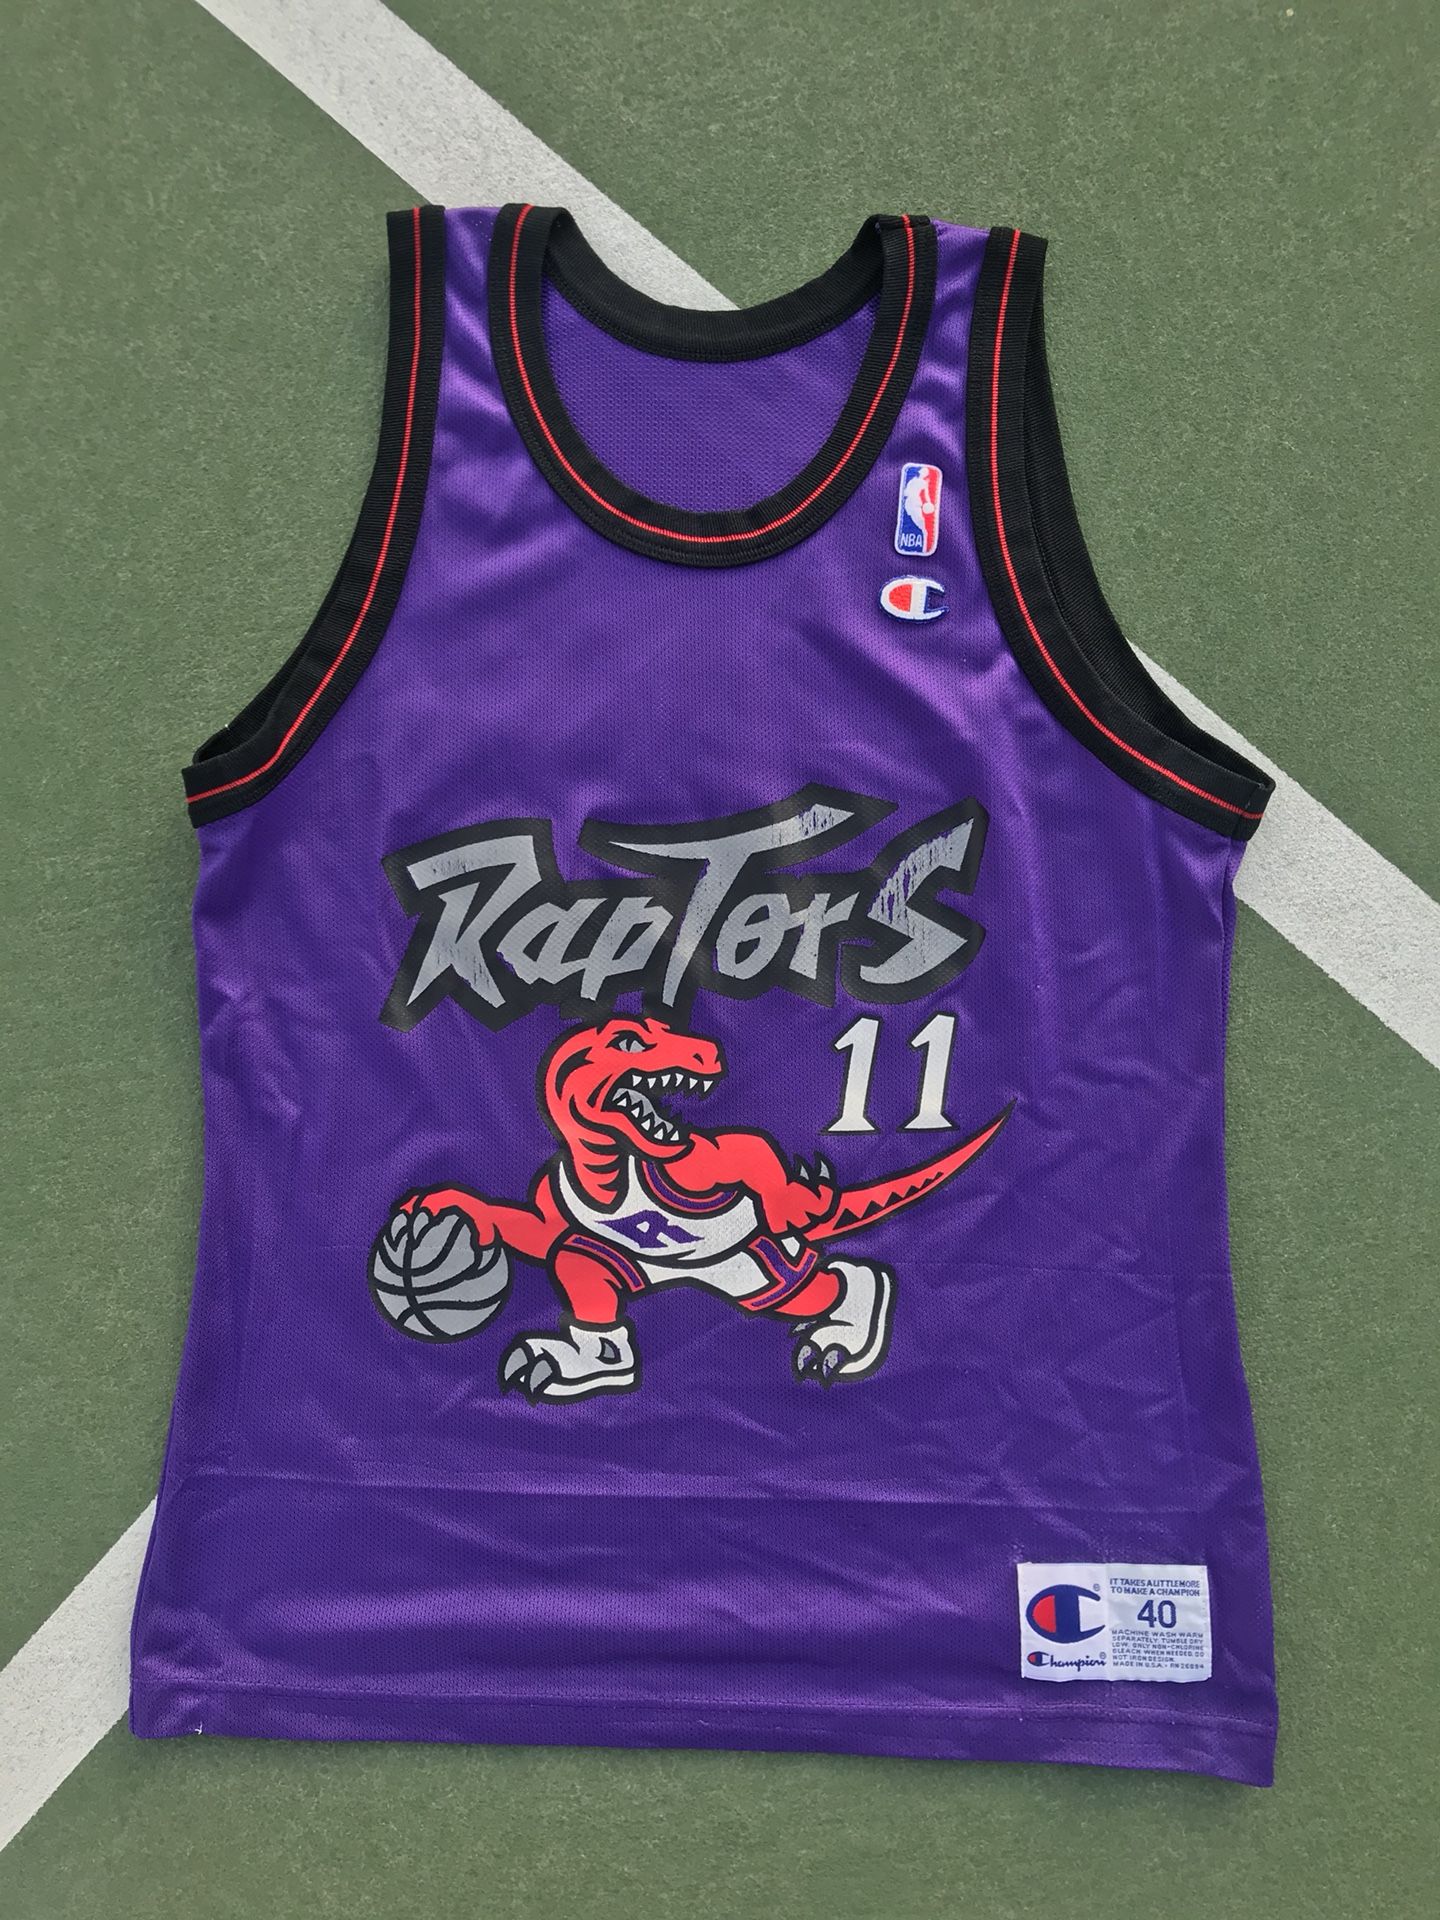 Vintage NBA Champion Raptors Jersey - Size 40 M